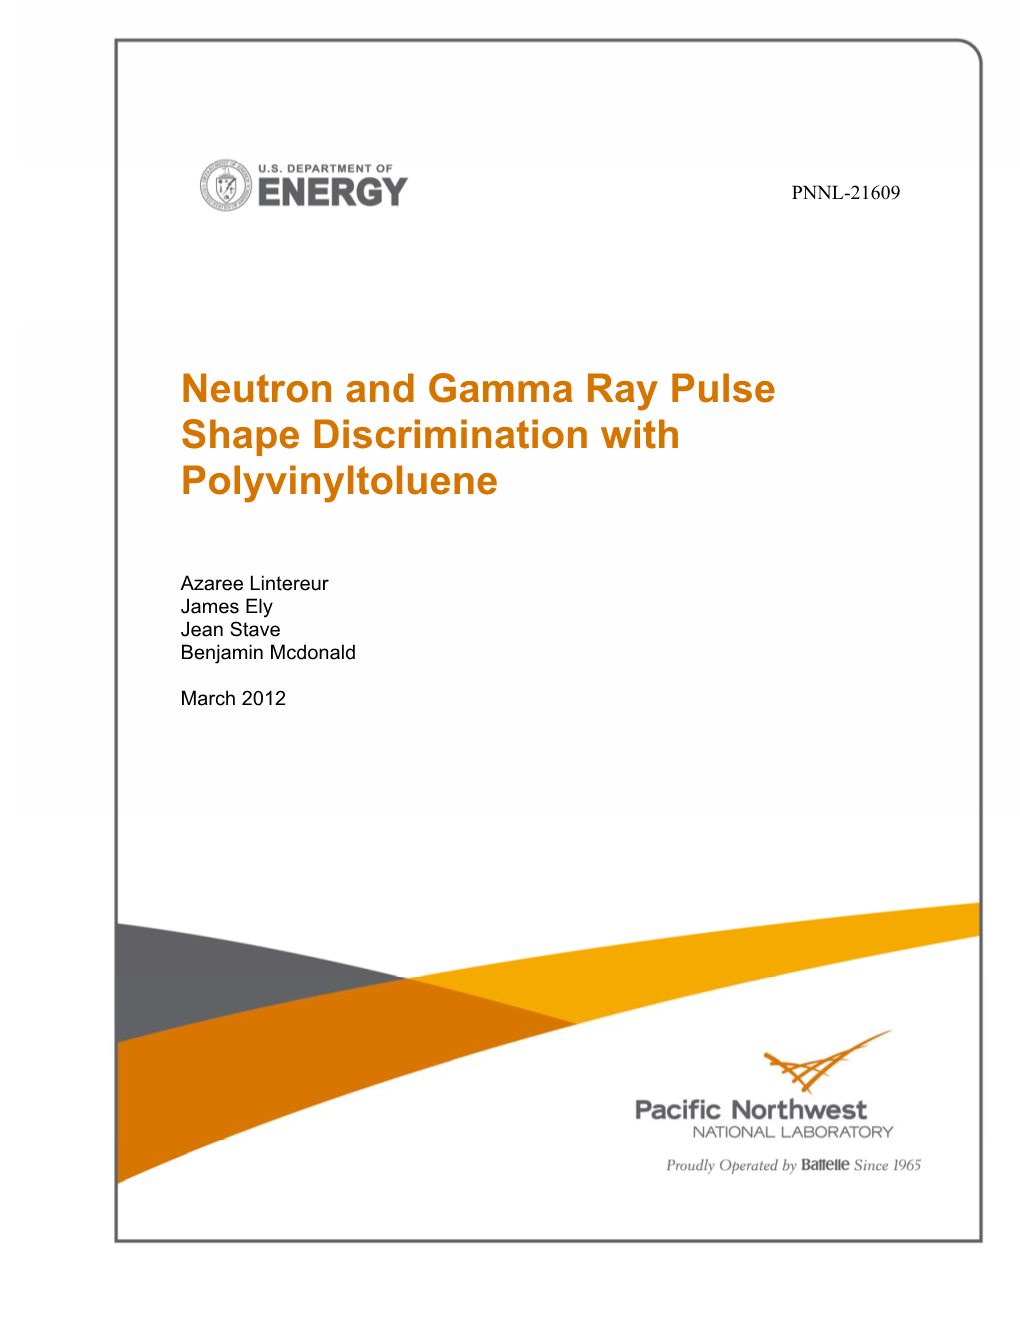 Neutron and Gamma Ray Pulse Shape Discrimination with Polyvinyltoluene